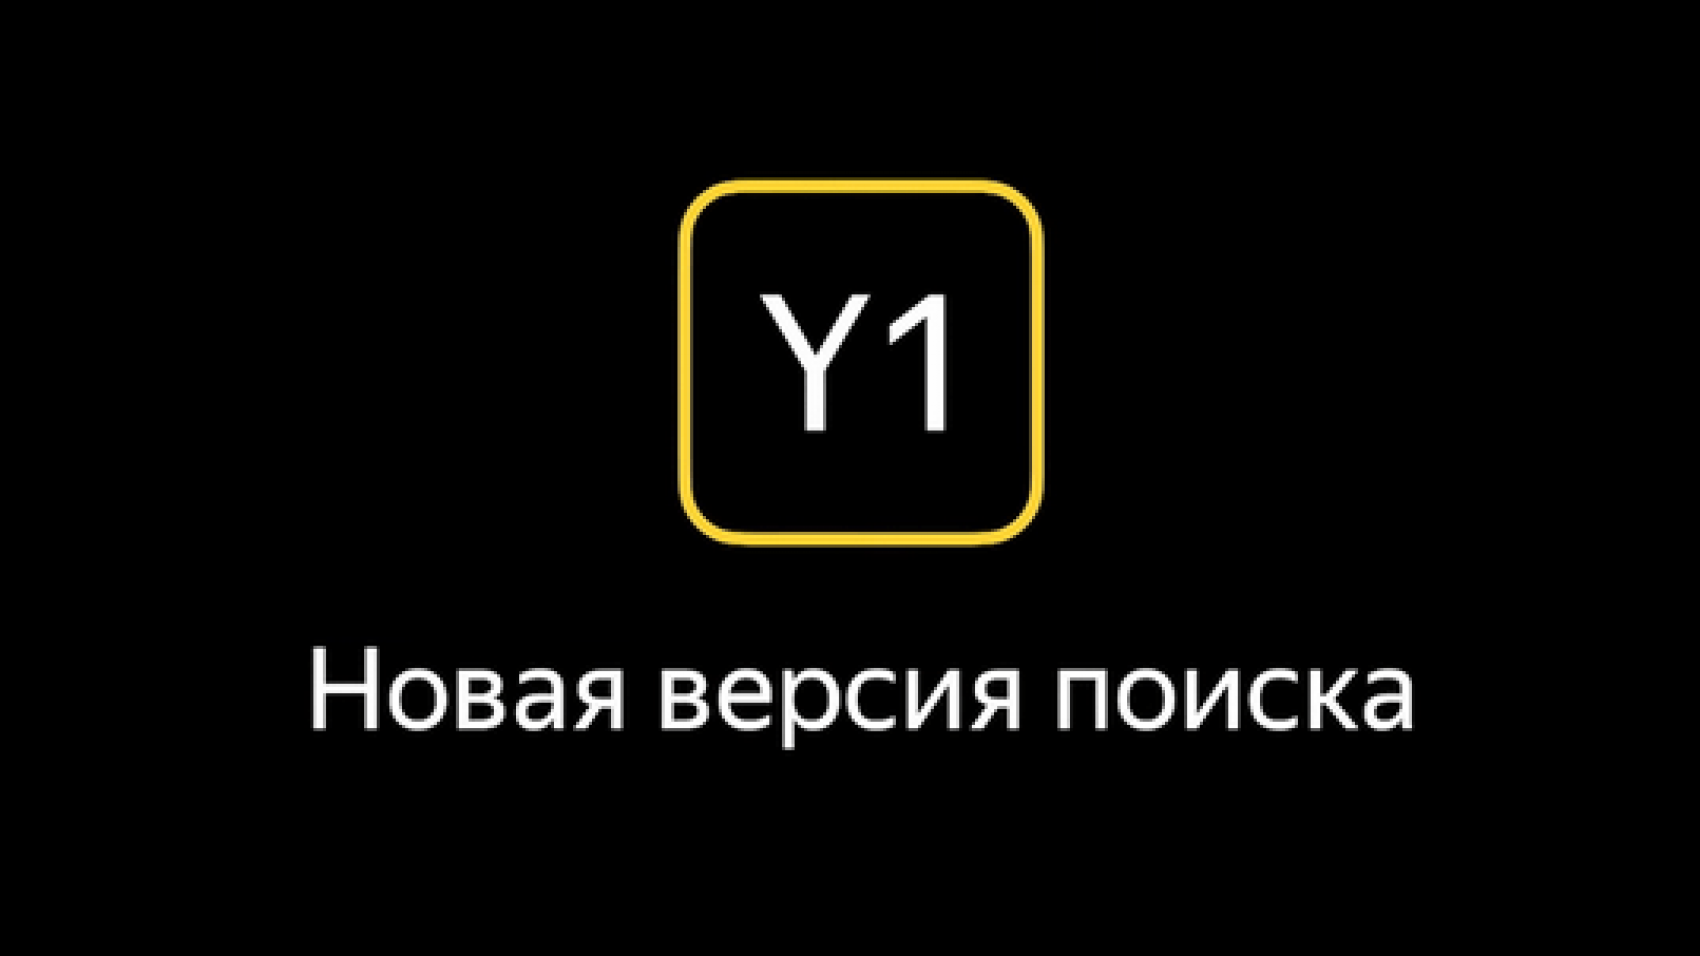 Как продвинуть сайт в условиях алгоритма Яндекса Y1